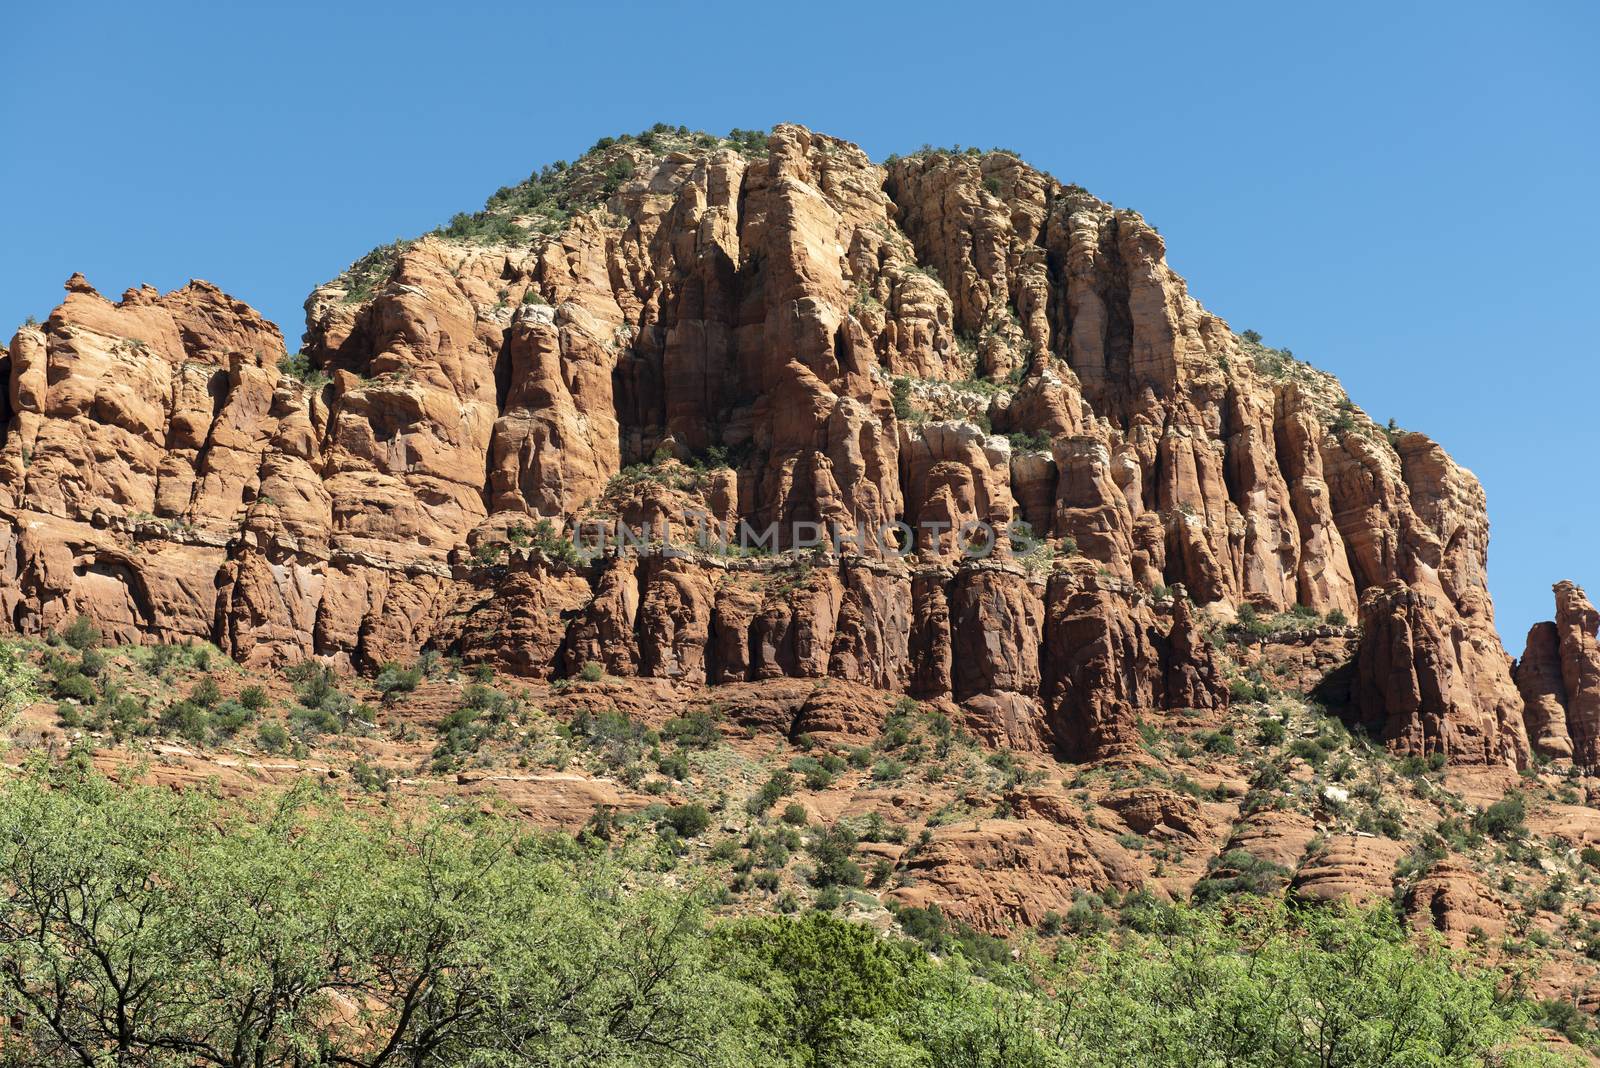 Red cliffs in Sedona, Arizona by Njean